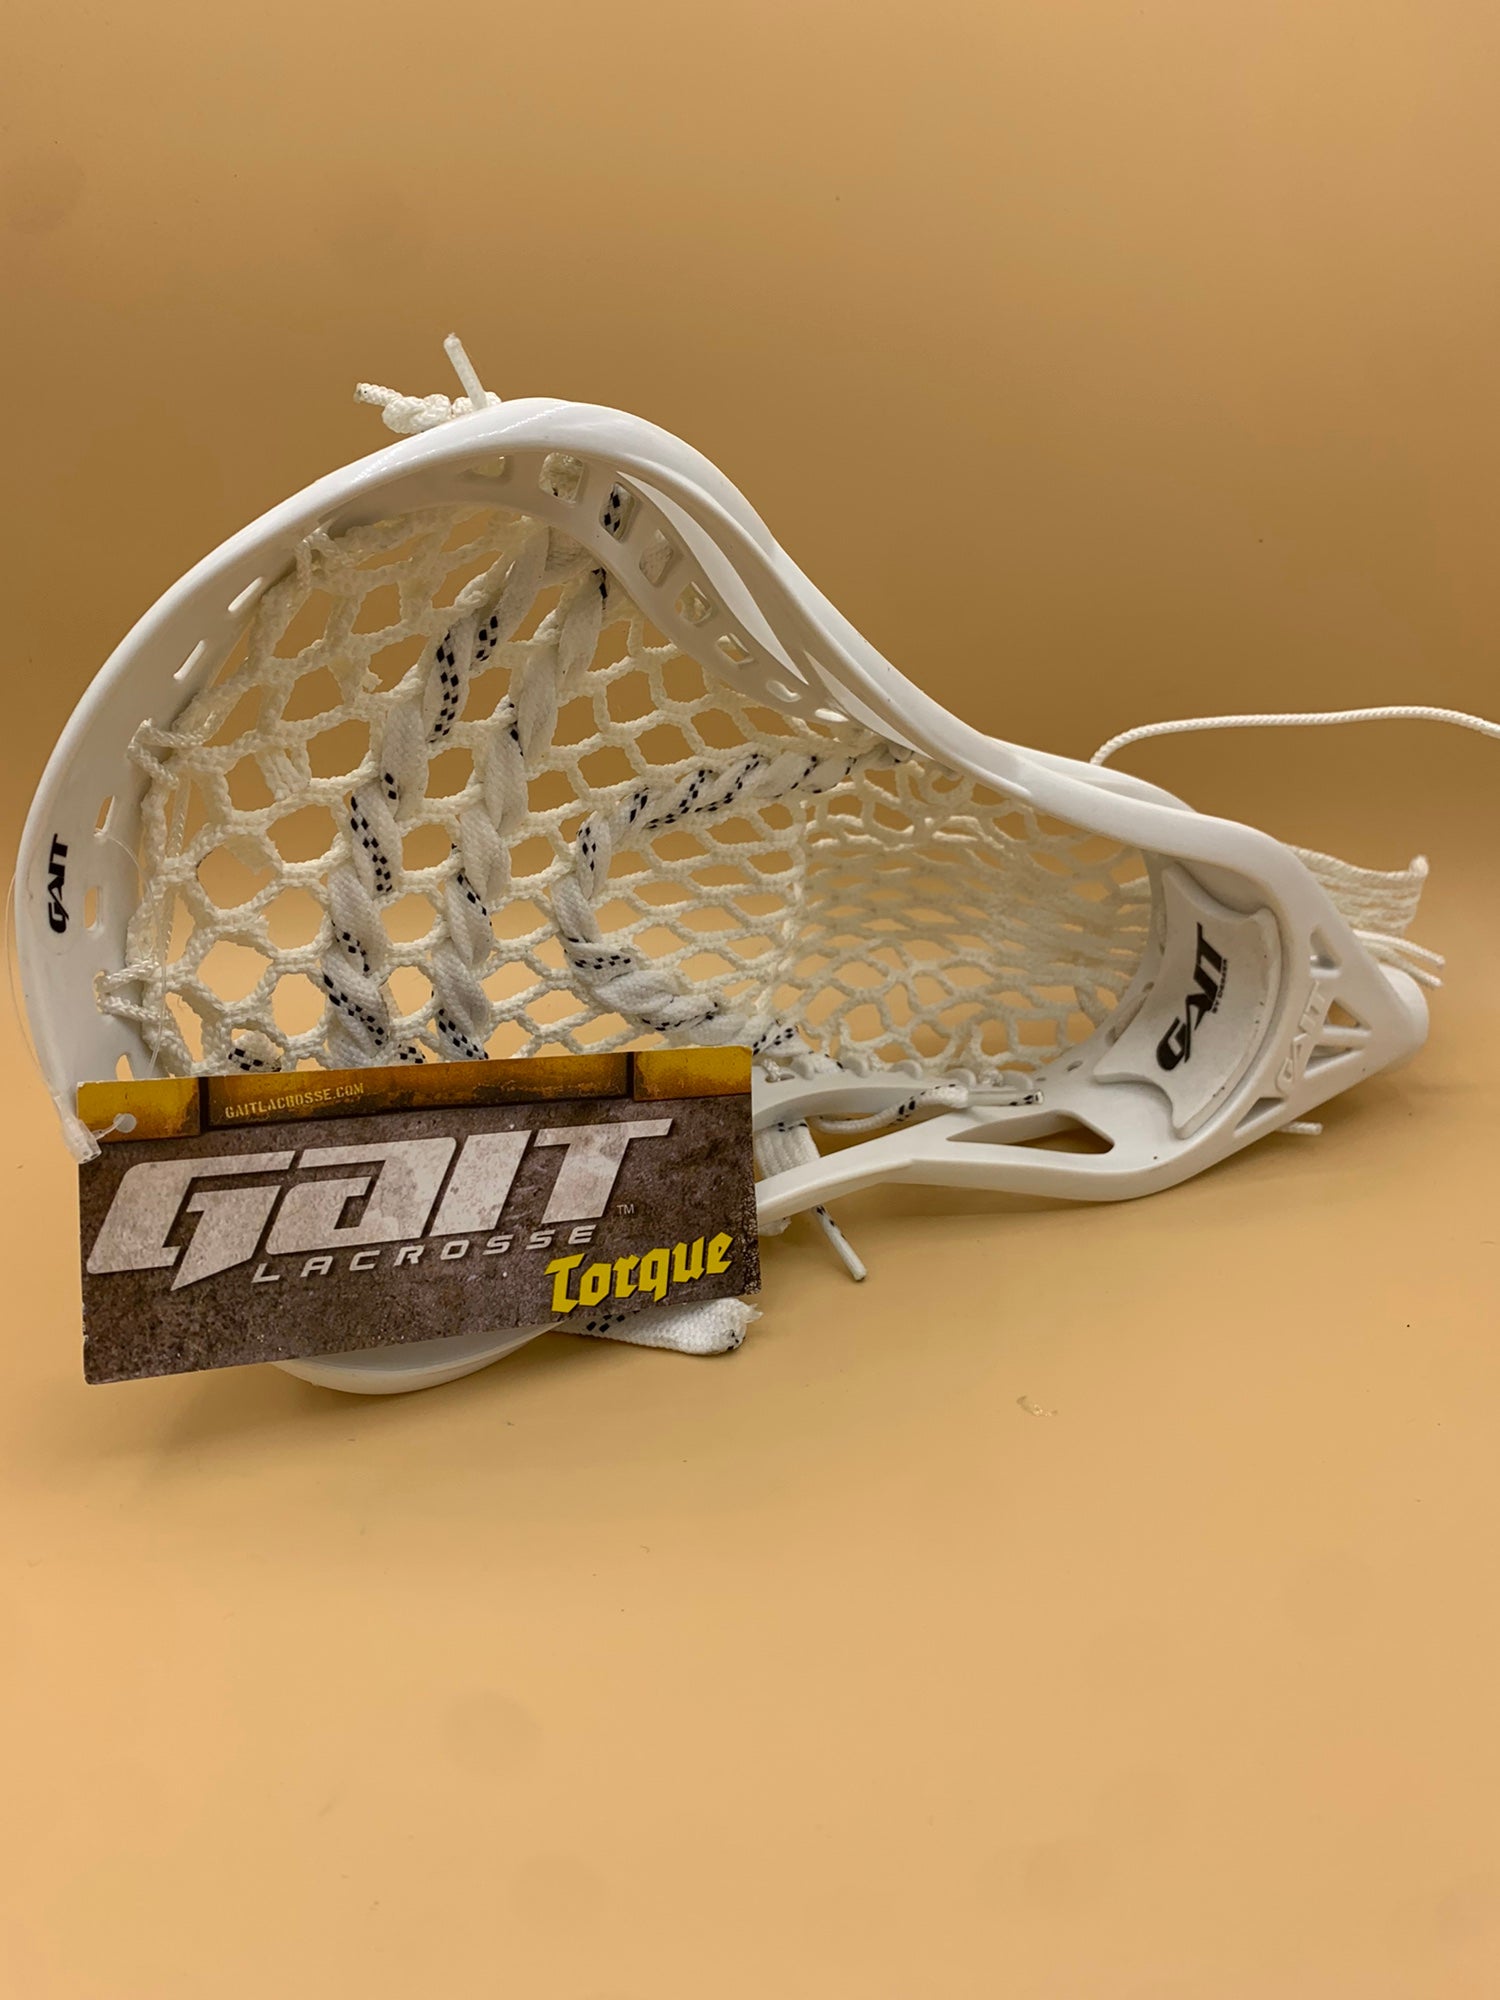 New Gait Torque lax lacrosse head ltd edition strung 